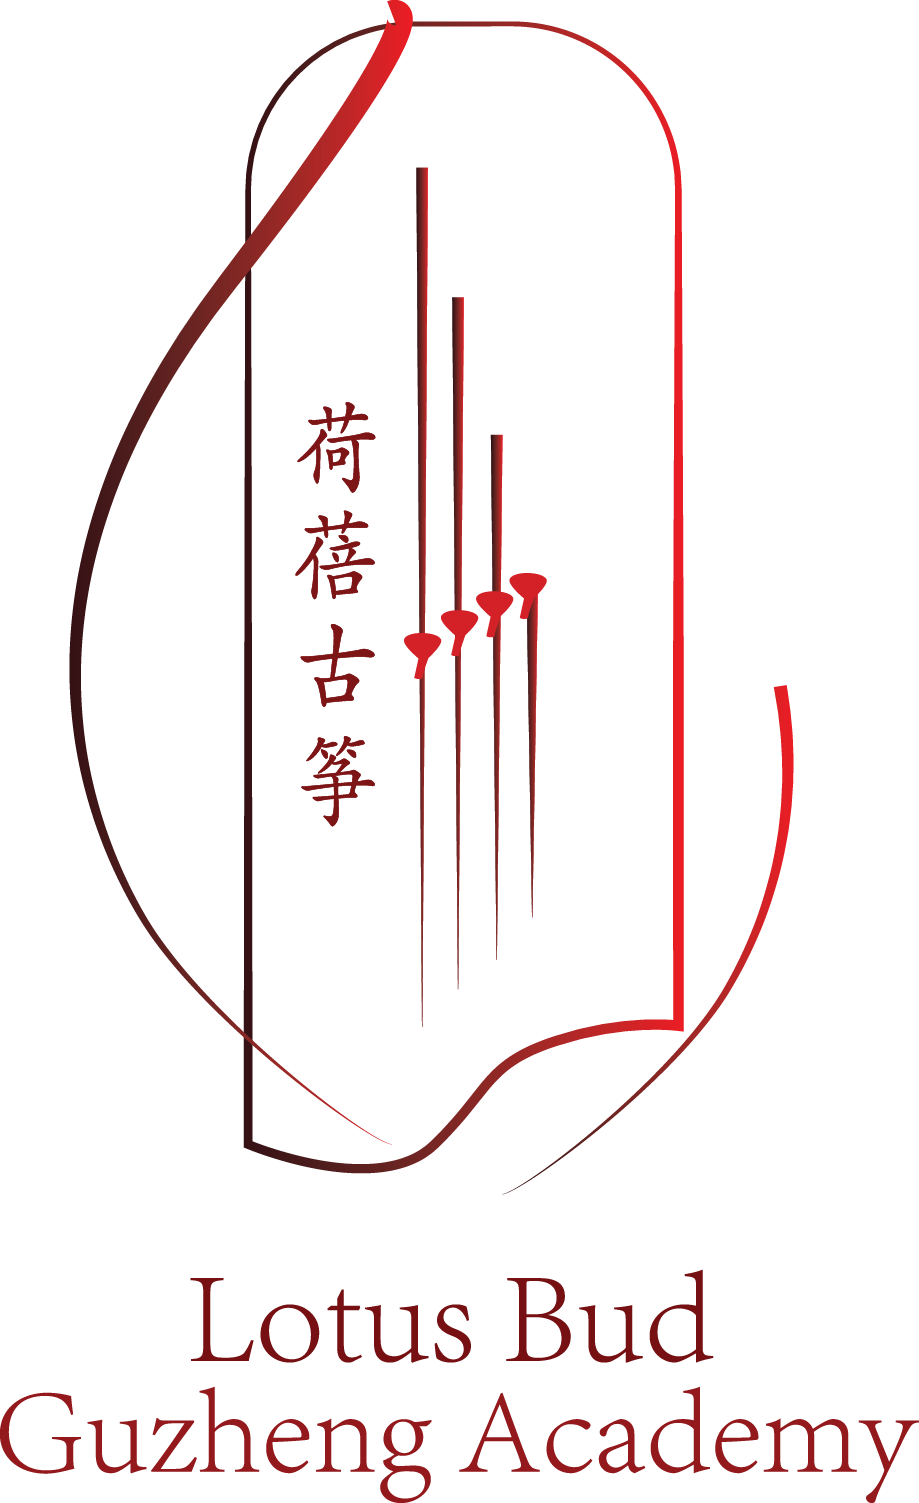 Lotus Bud Guzheng Academy